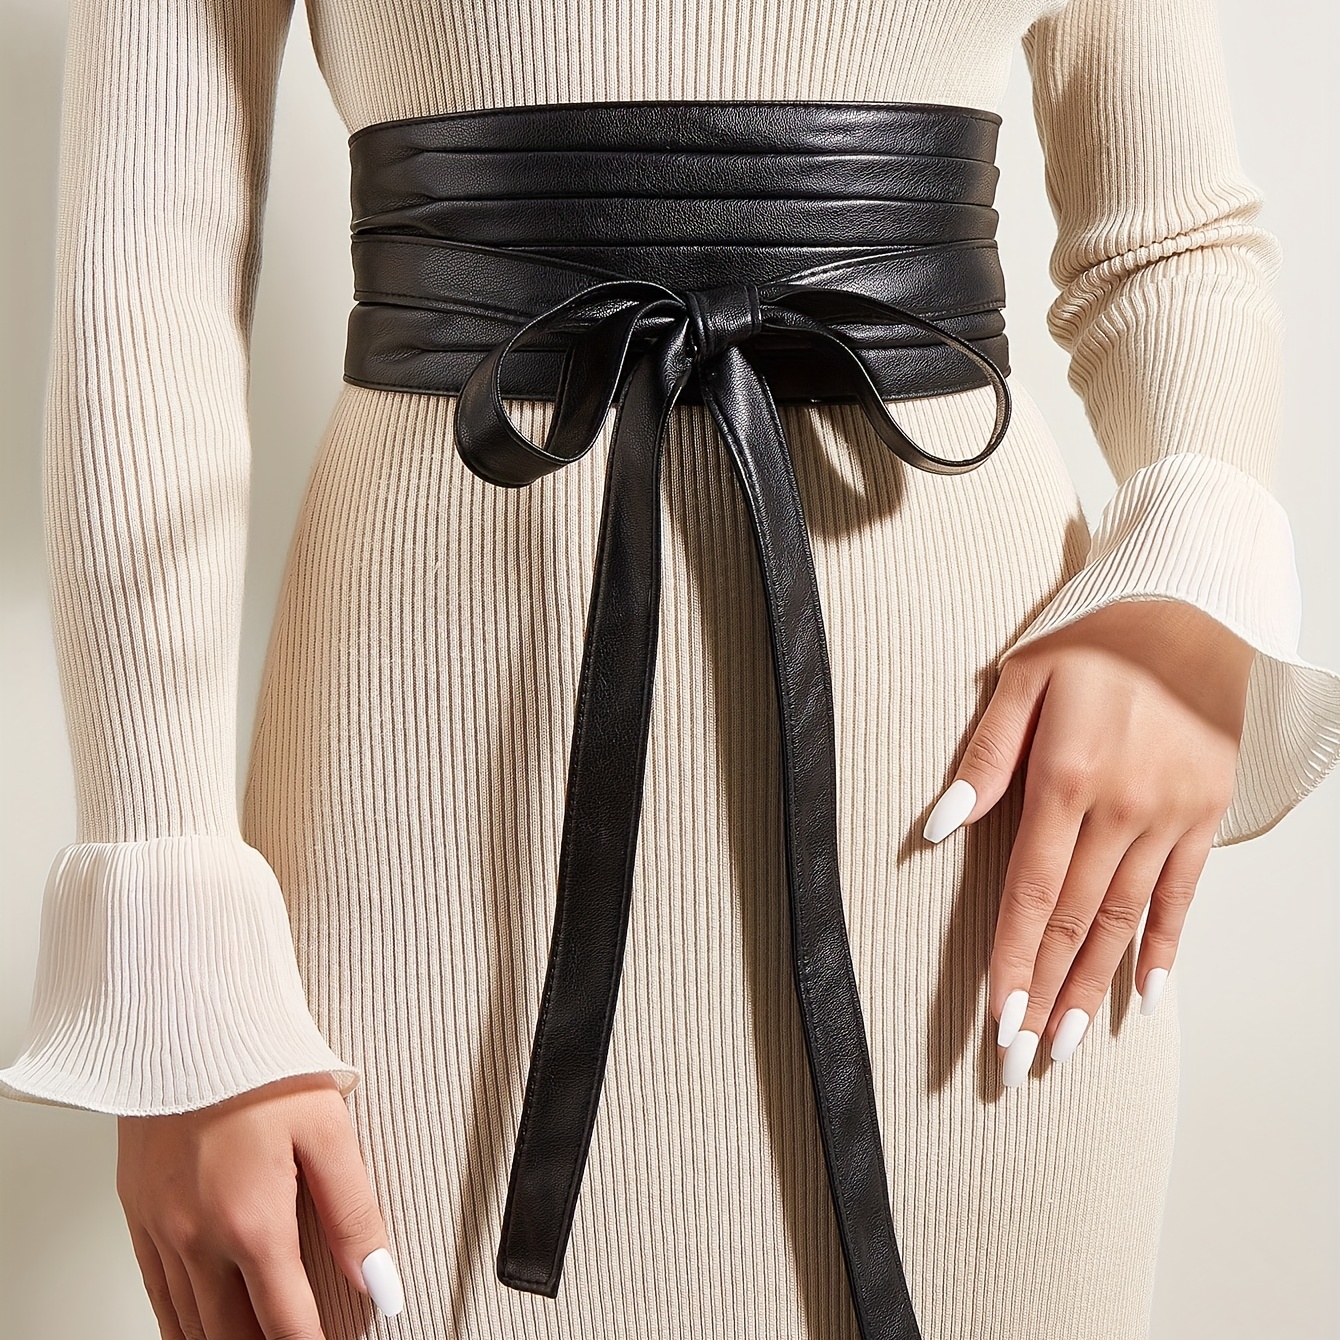 Women's Vintage Girdle Belt